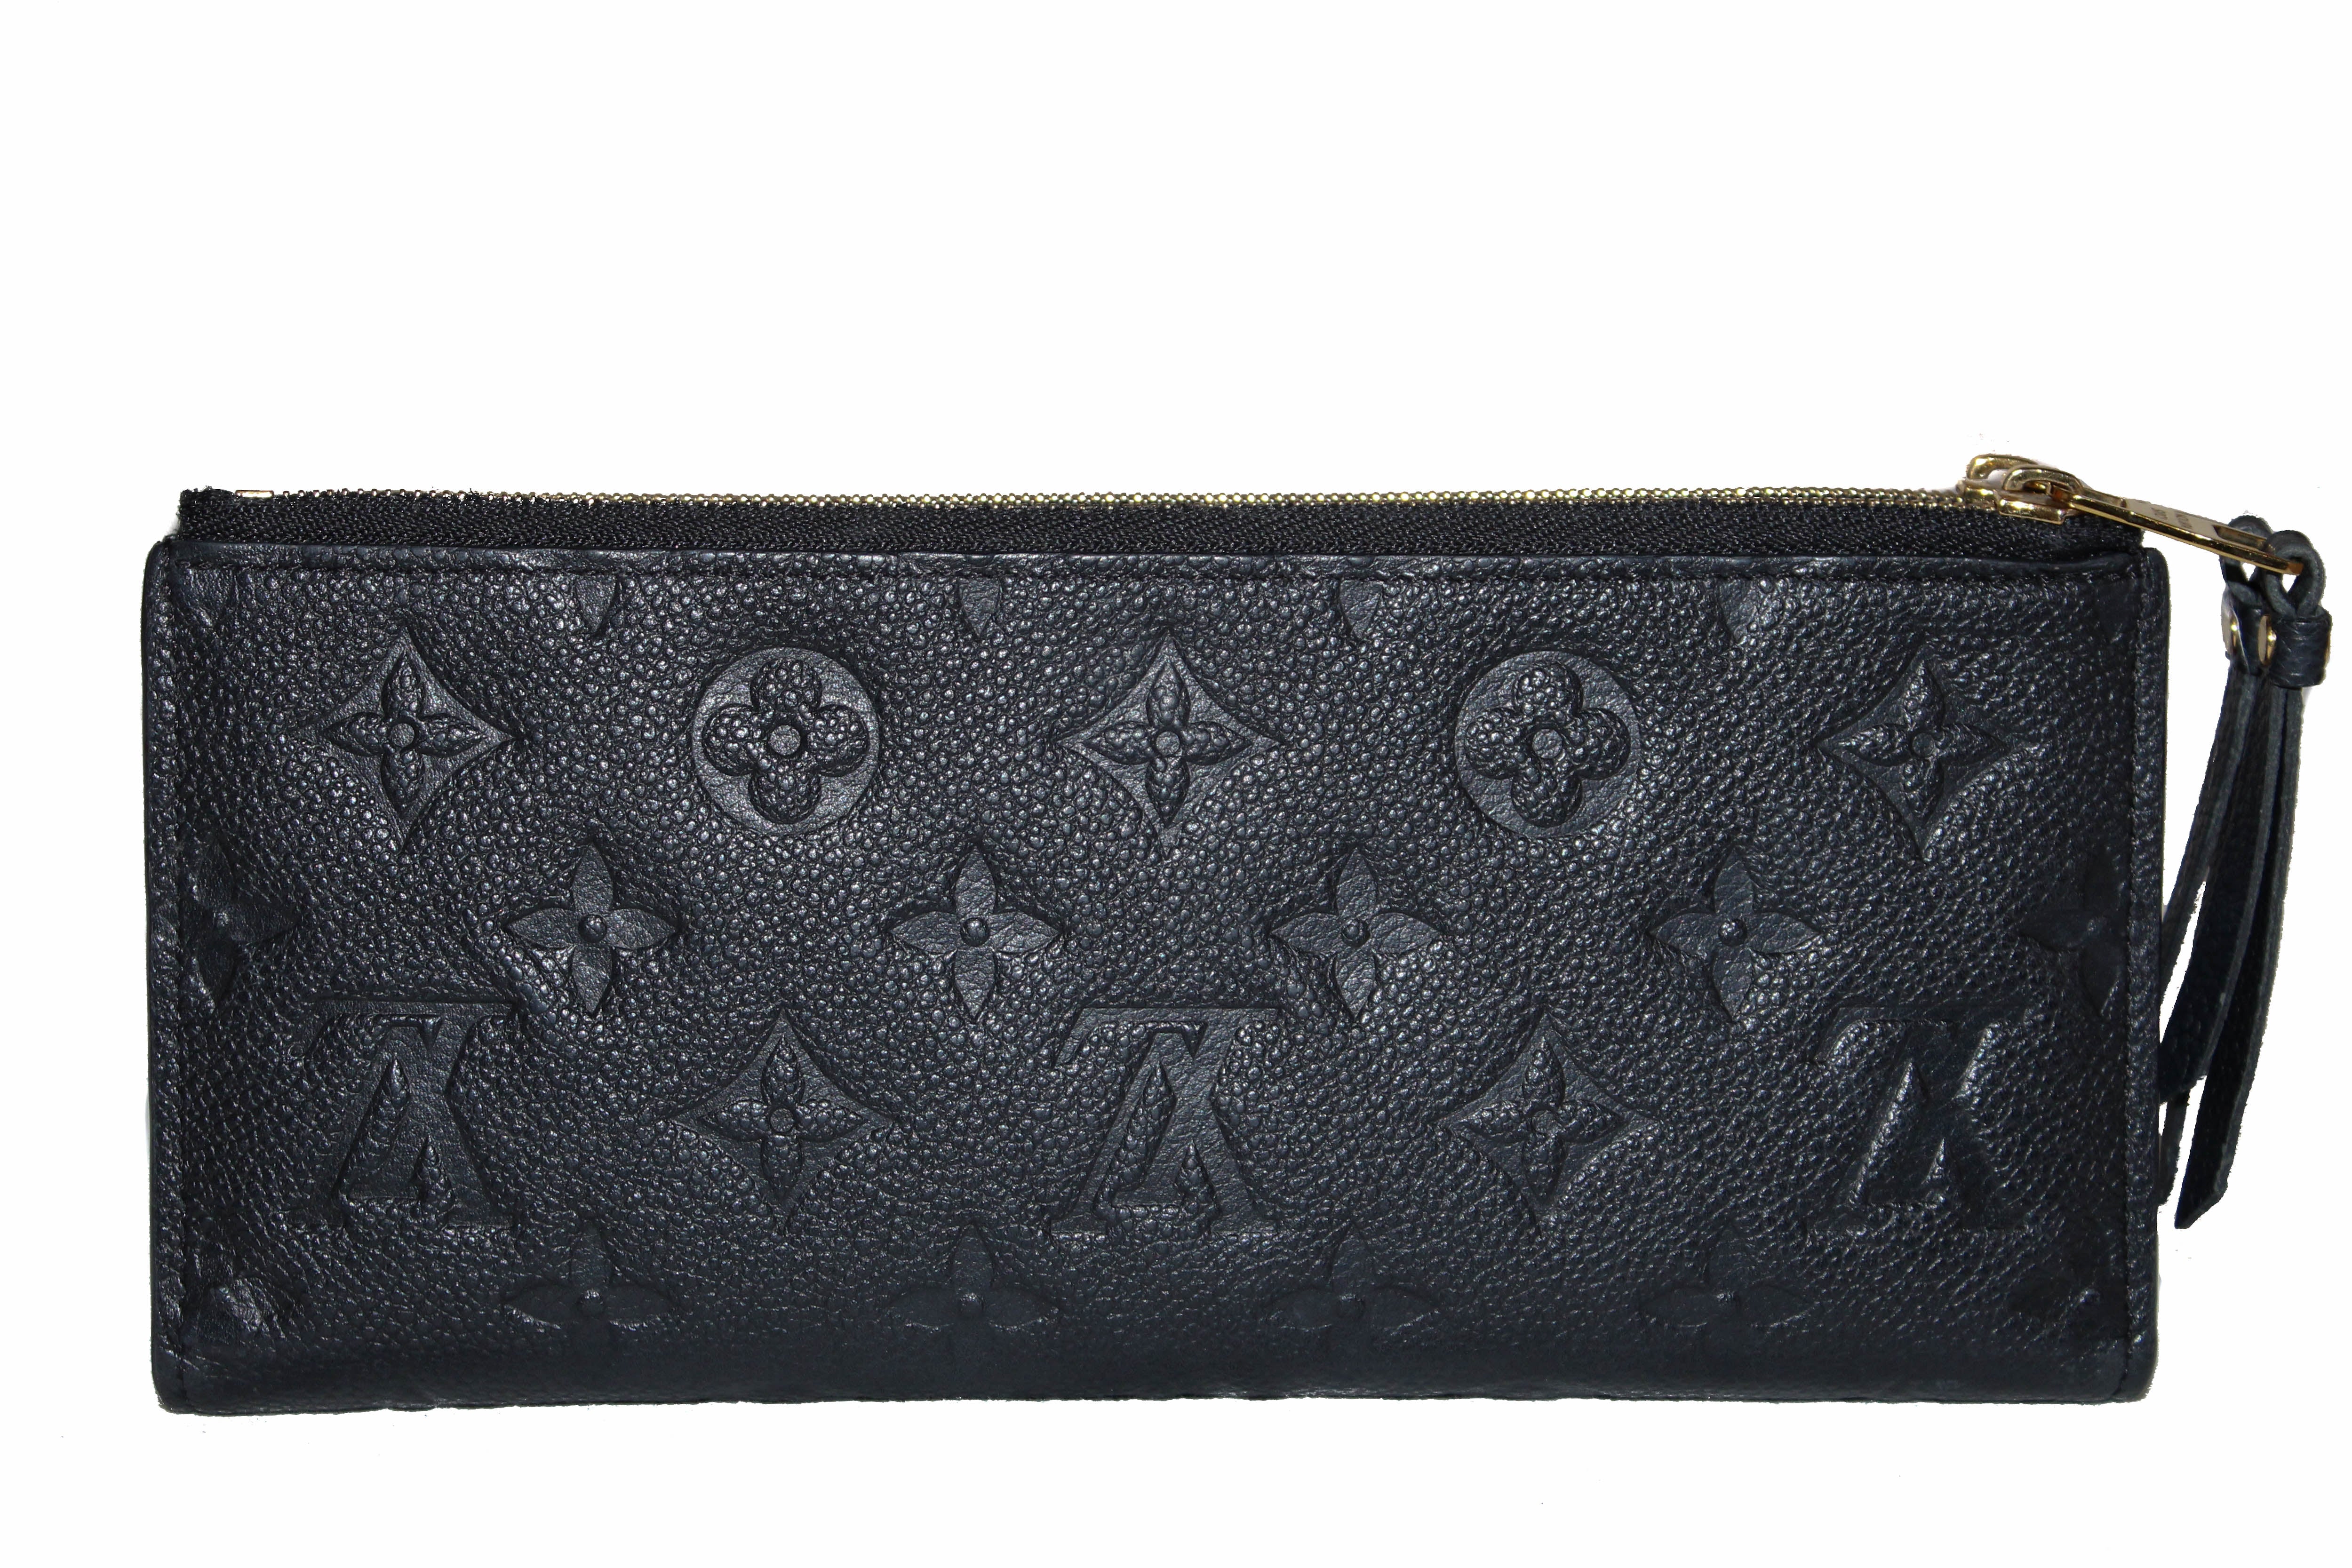 Louis Vuitton Adele wallet in Empreinte NoirNot on US website!? 